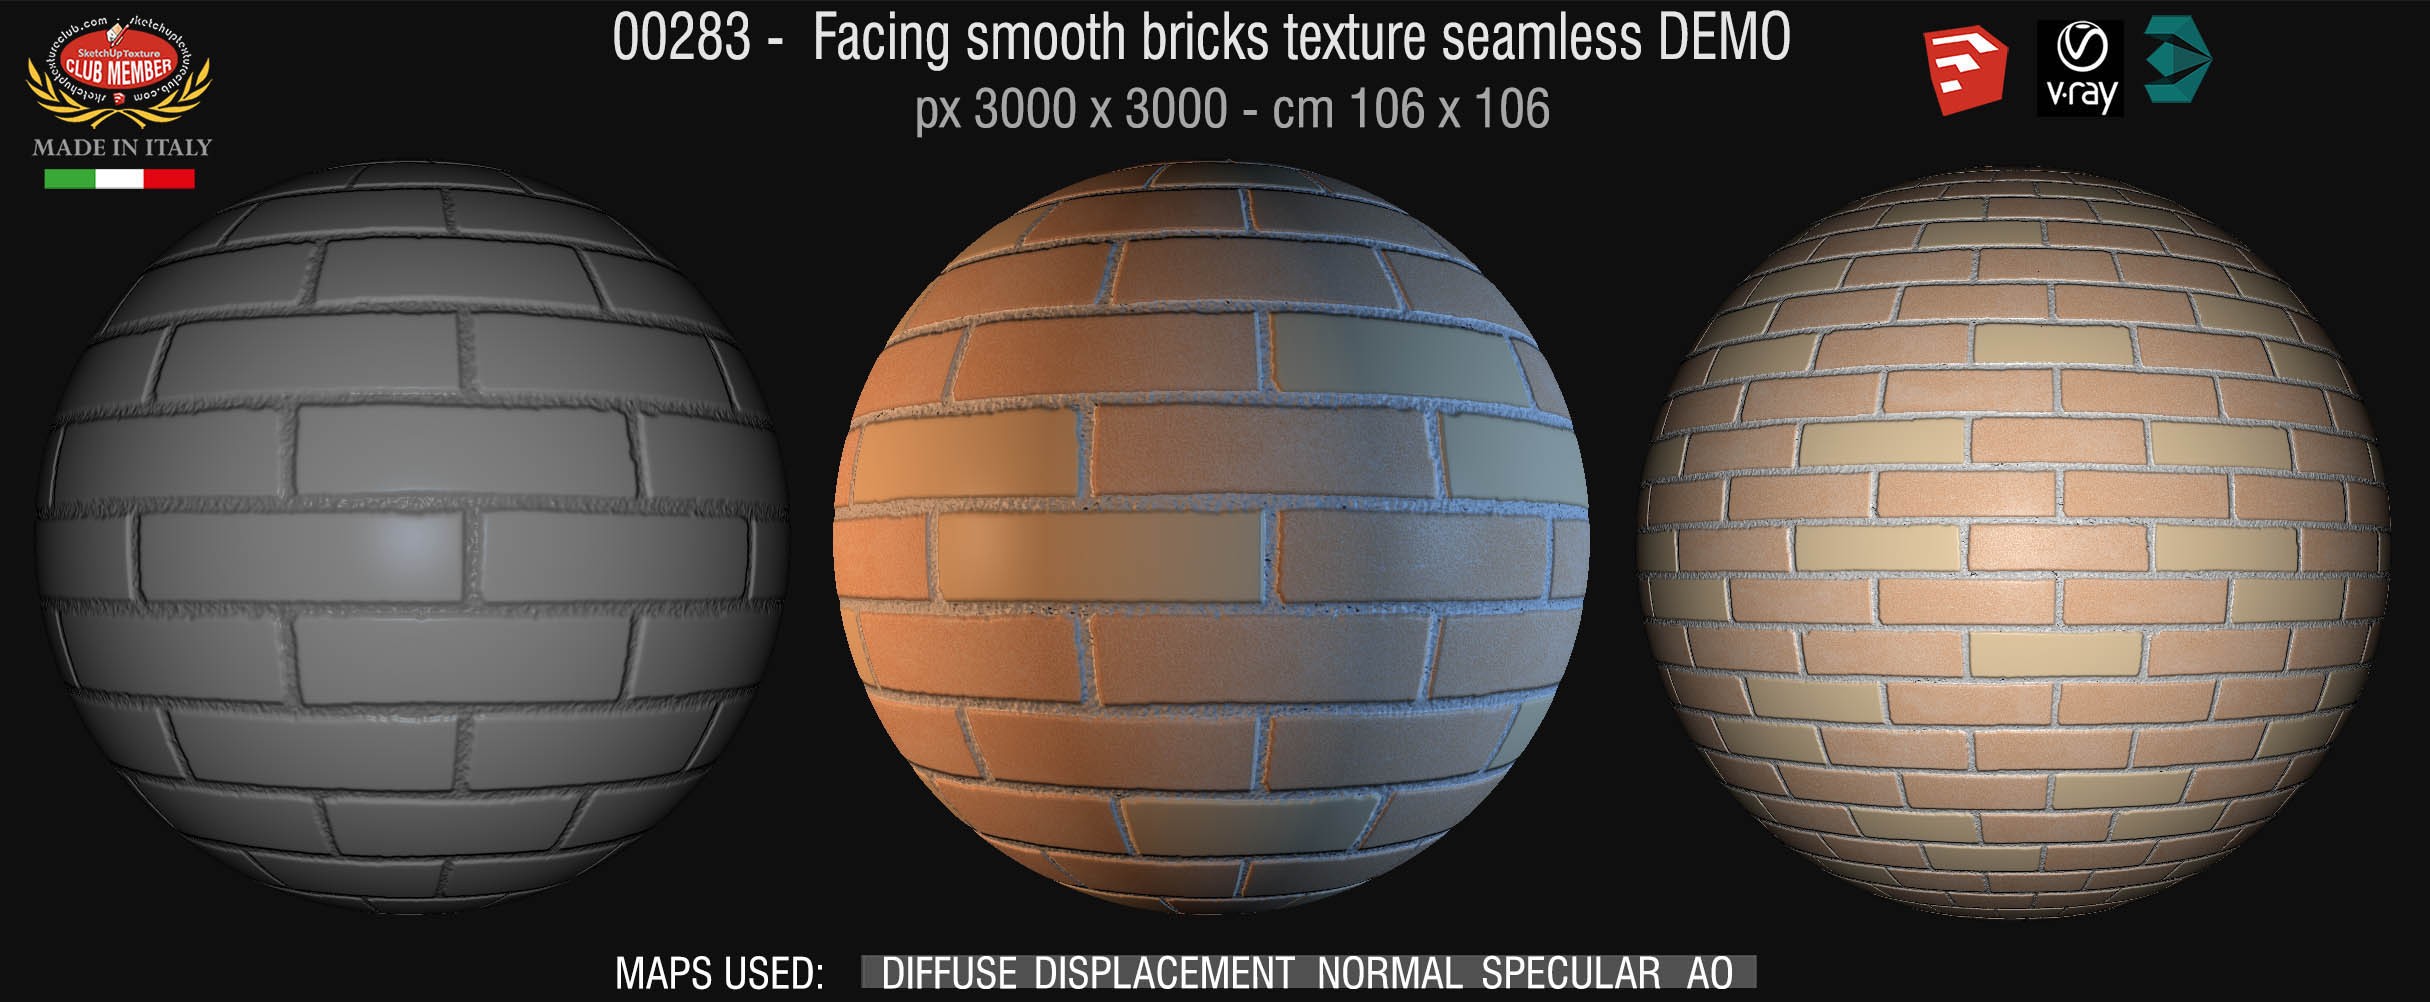 00283 Facing smooth bricks texture seamless + maps DEMO